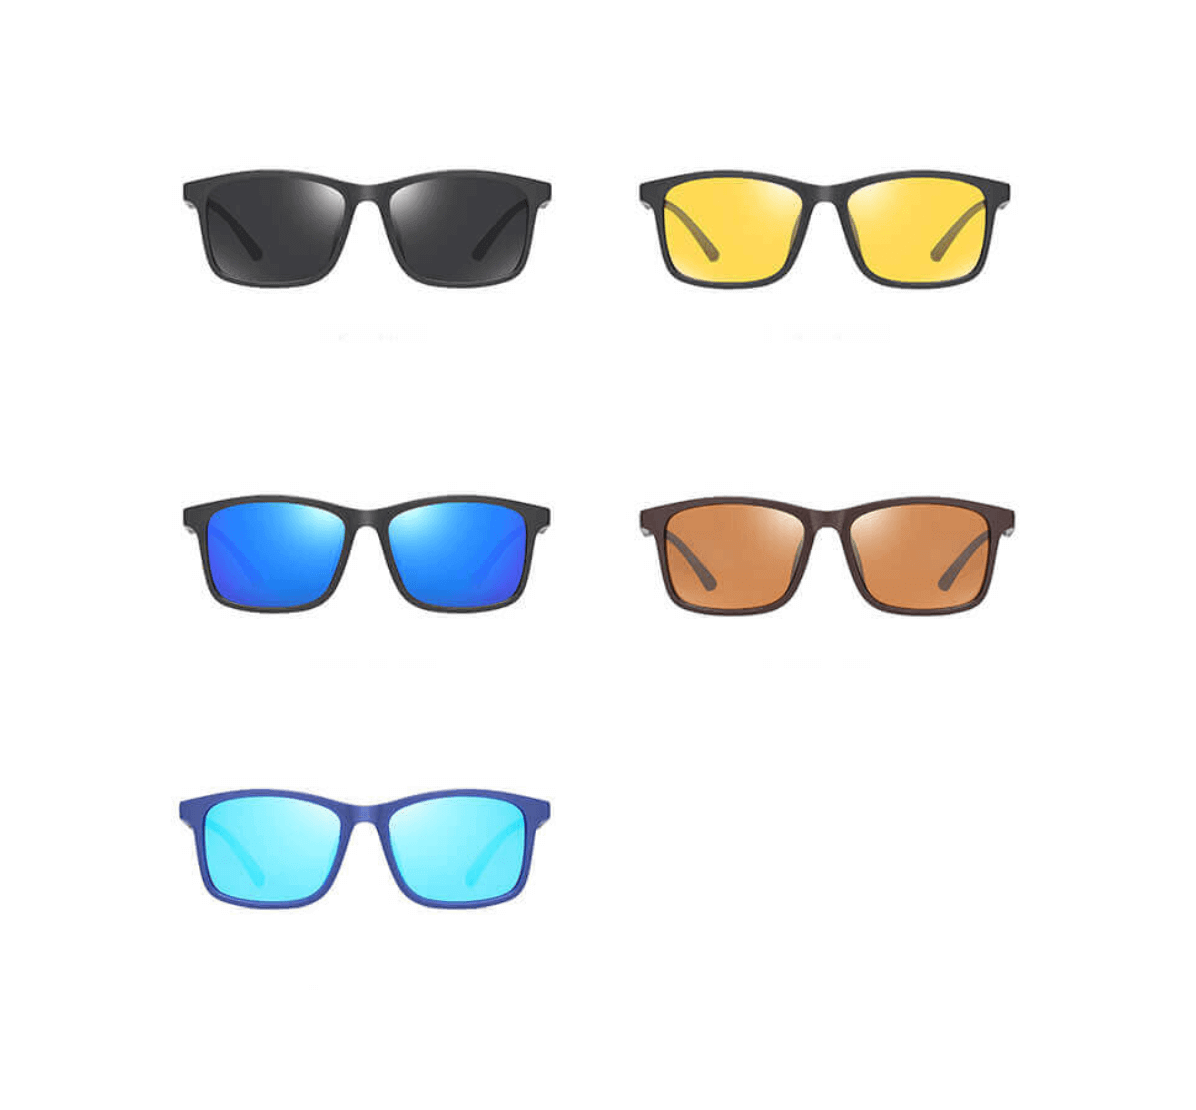 wholesale plastic sunglasses, cheap plastic sunglasses in bulk, sunglasses wholesale vendors, wholesale eyewear suppliers